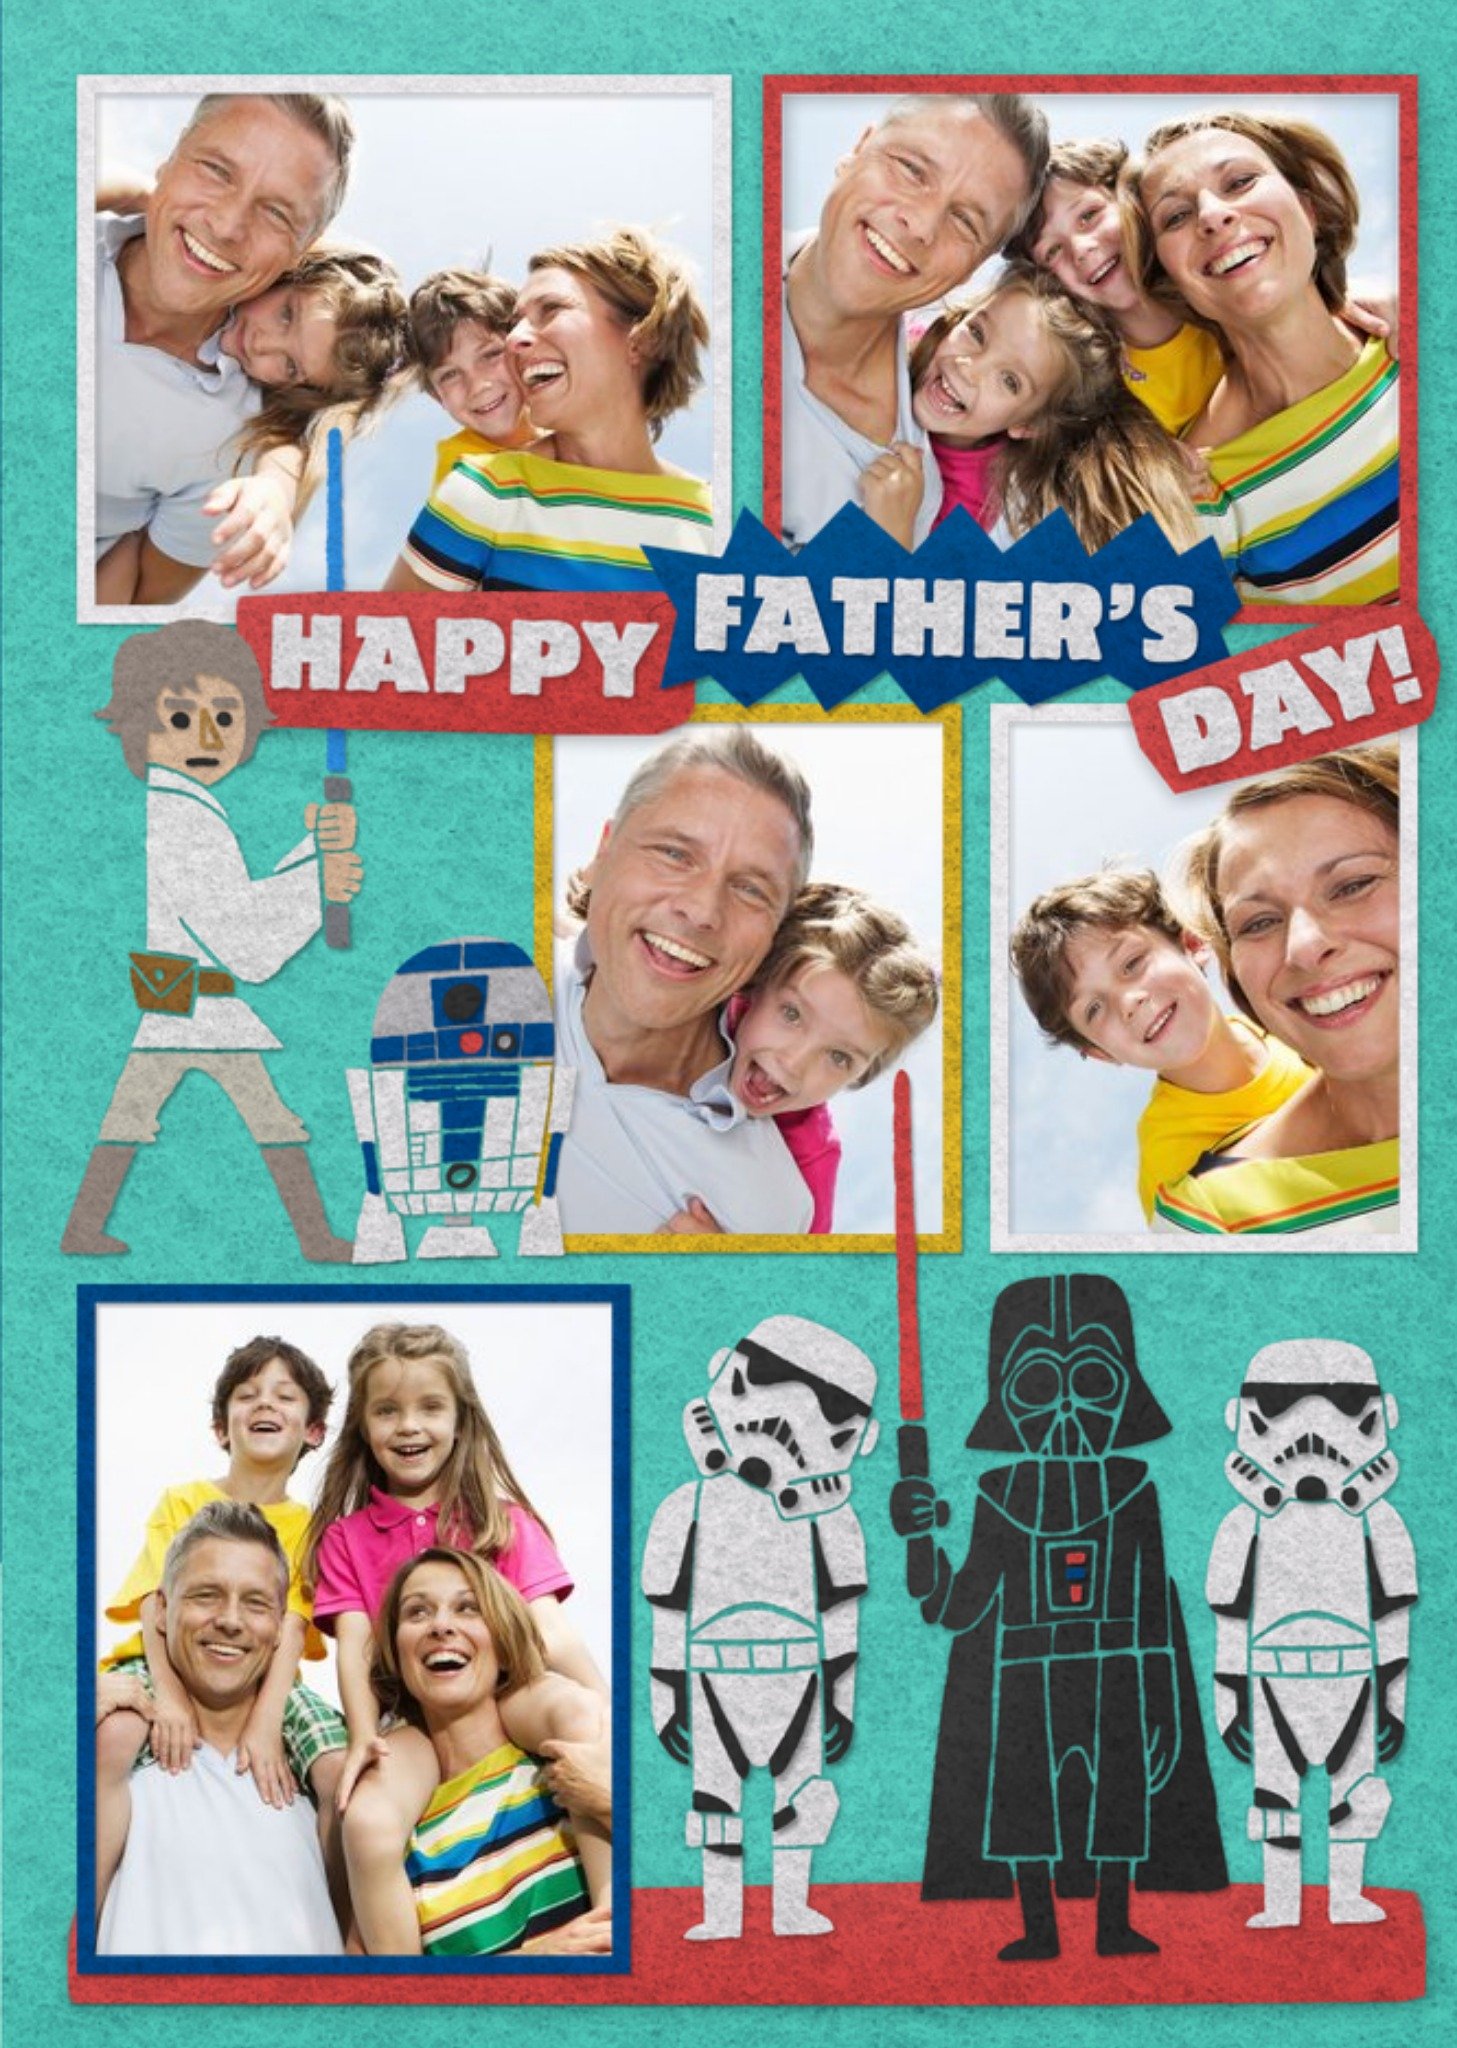 Disney Star Wars Cartoon Characters Happy Father's Day Multi-Photo Card Ecard